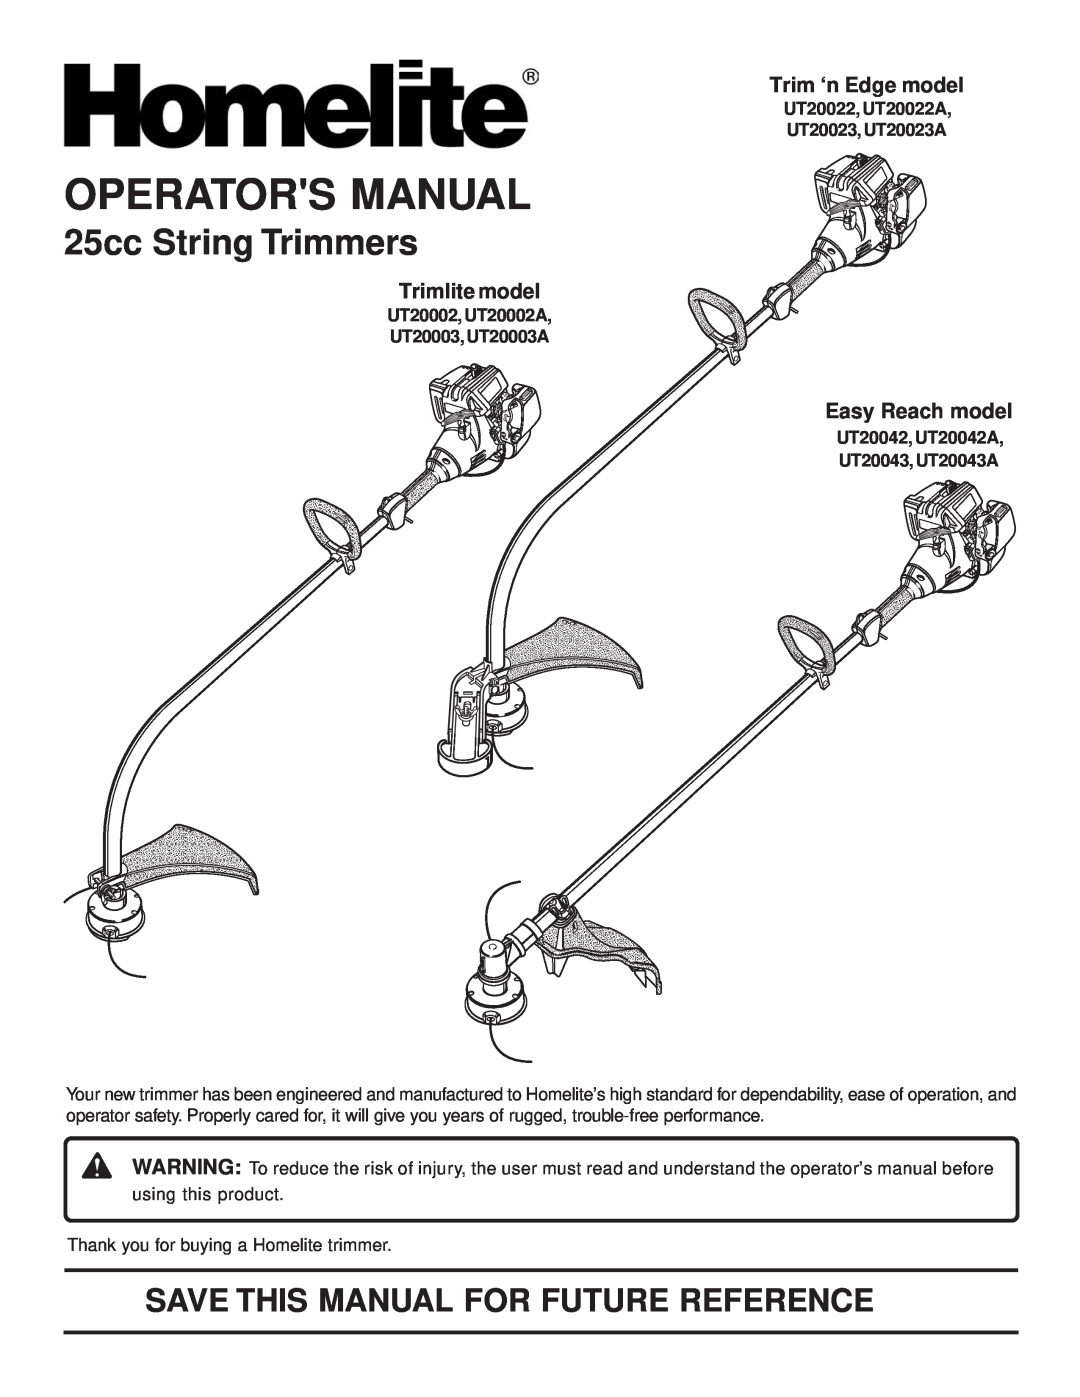 Homelite UT20003A manual Operators Manual, 25cc String Trimmers, Trimlite model, Trim ‘n Edge model, Easy Reach model 